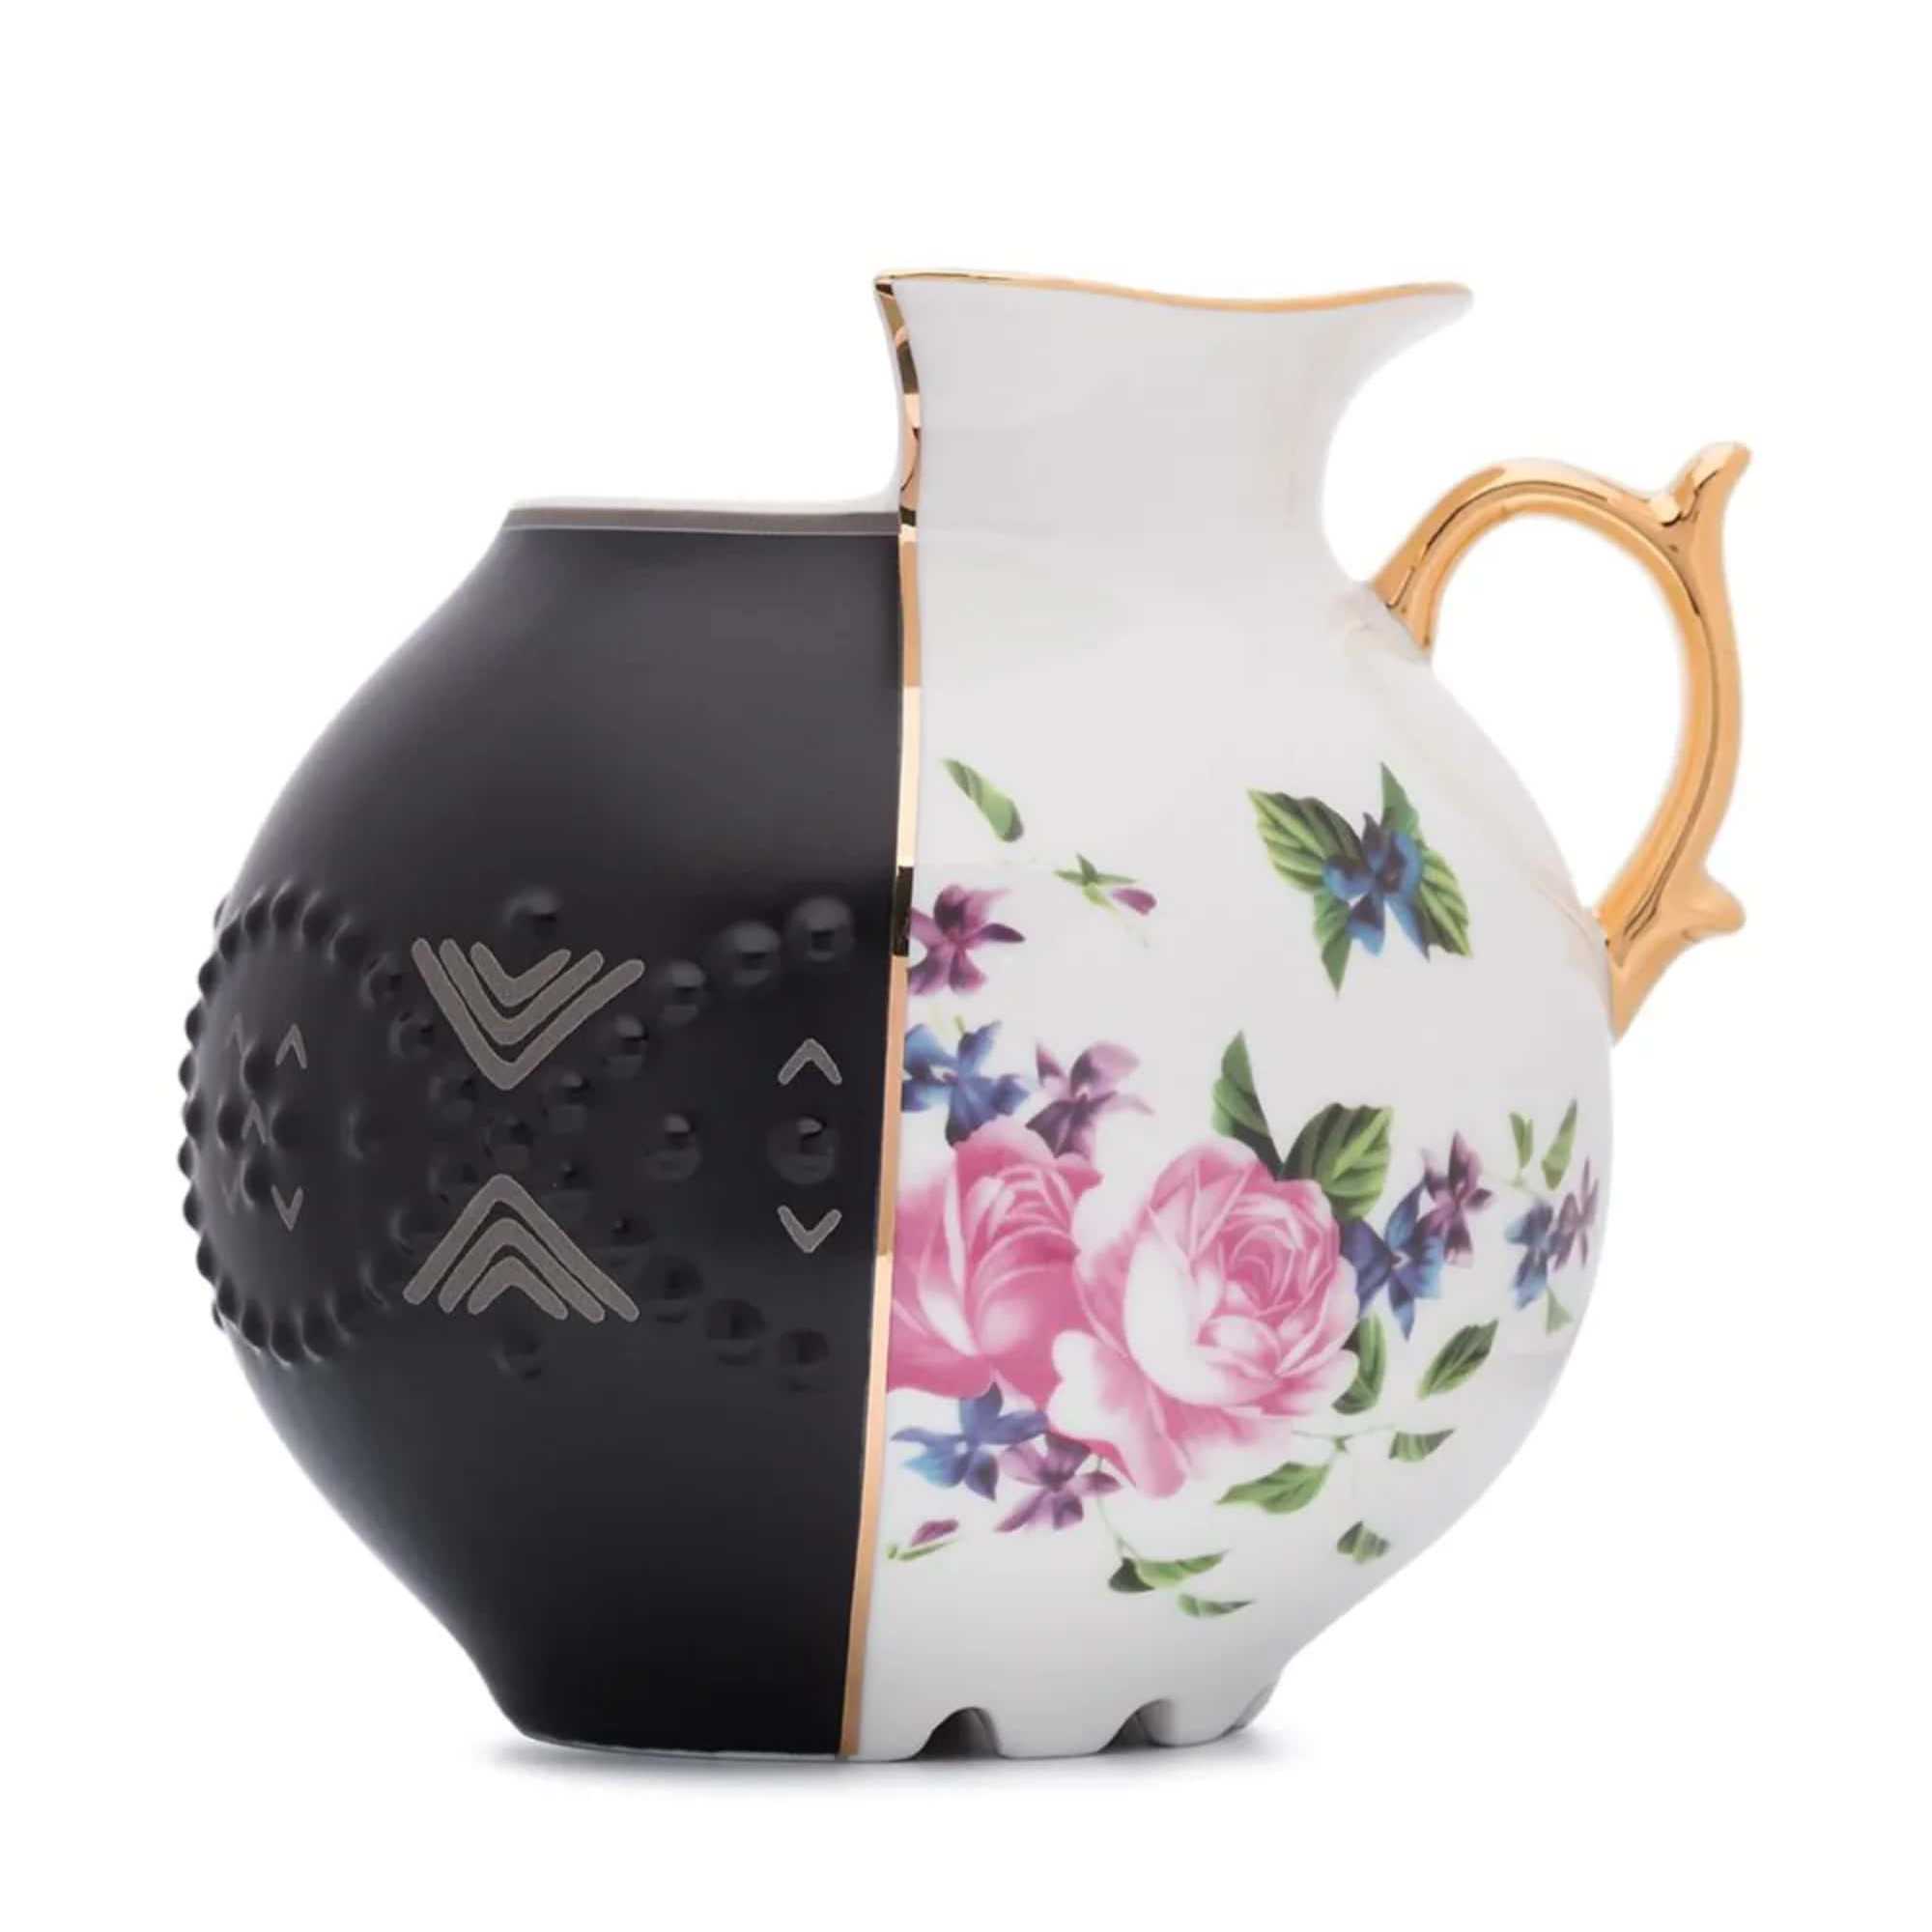 Seletti Hybrid Lfe Vase Porcelain Vase